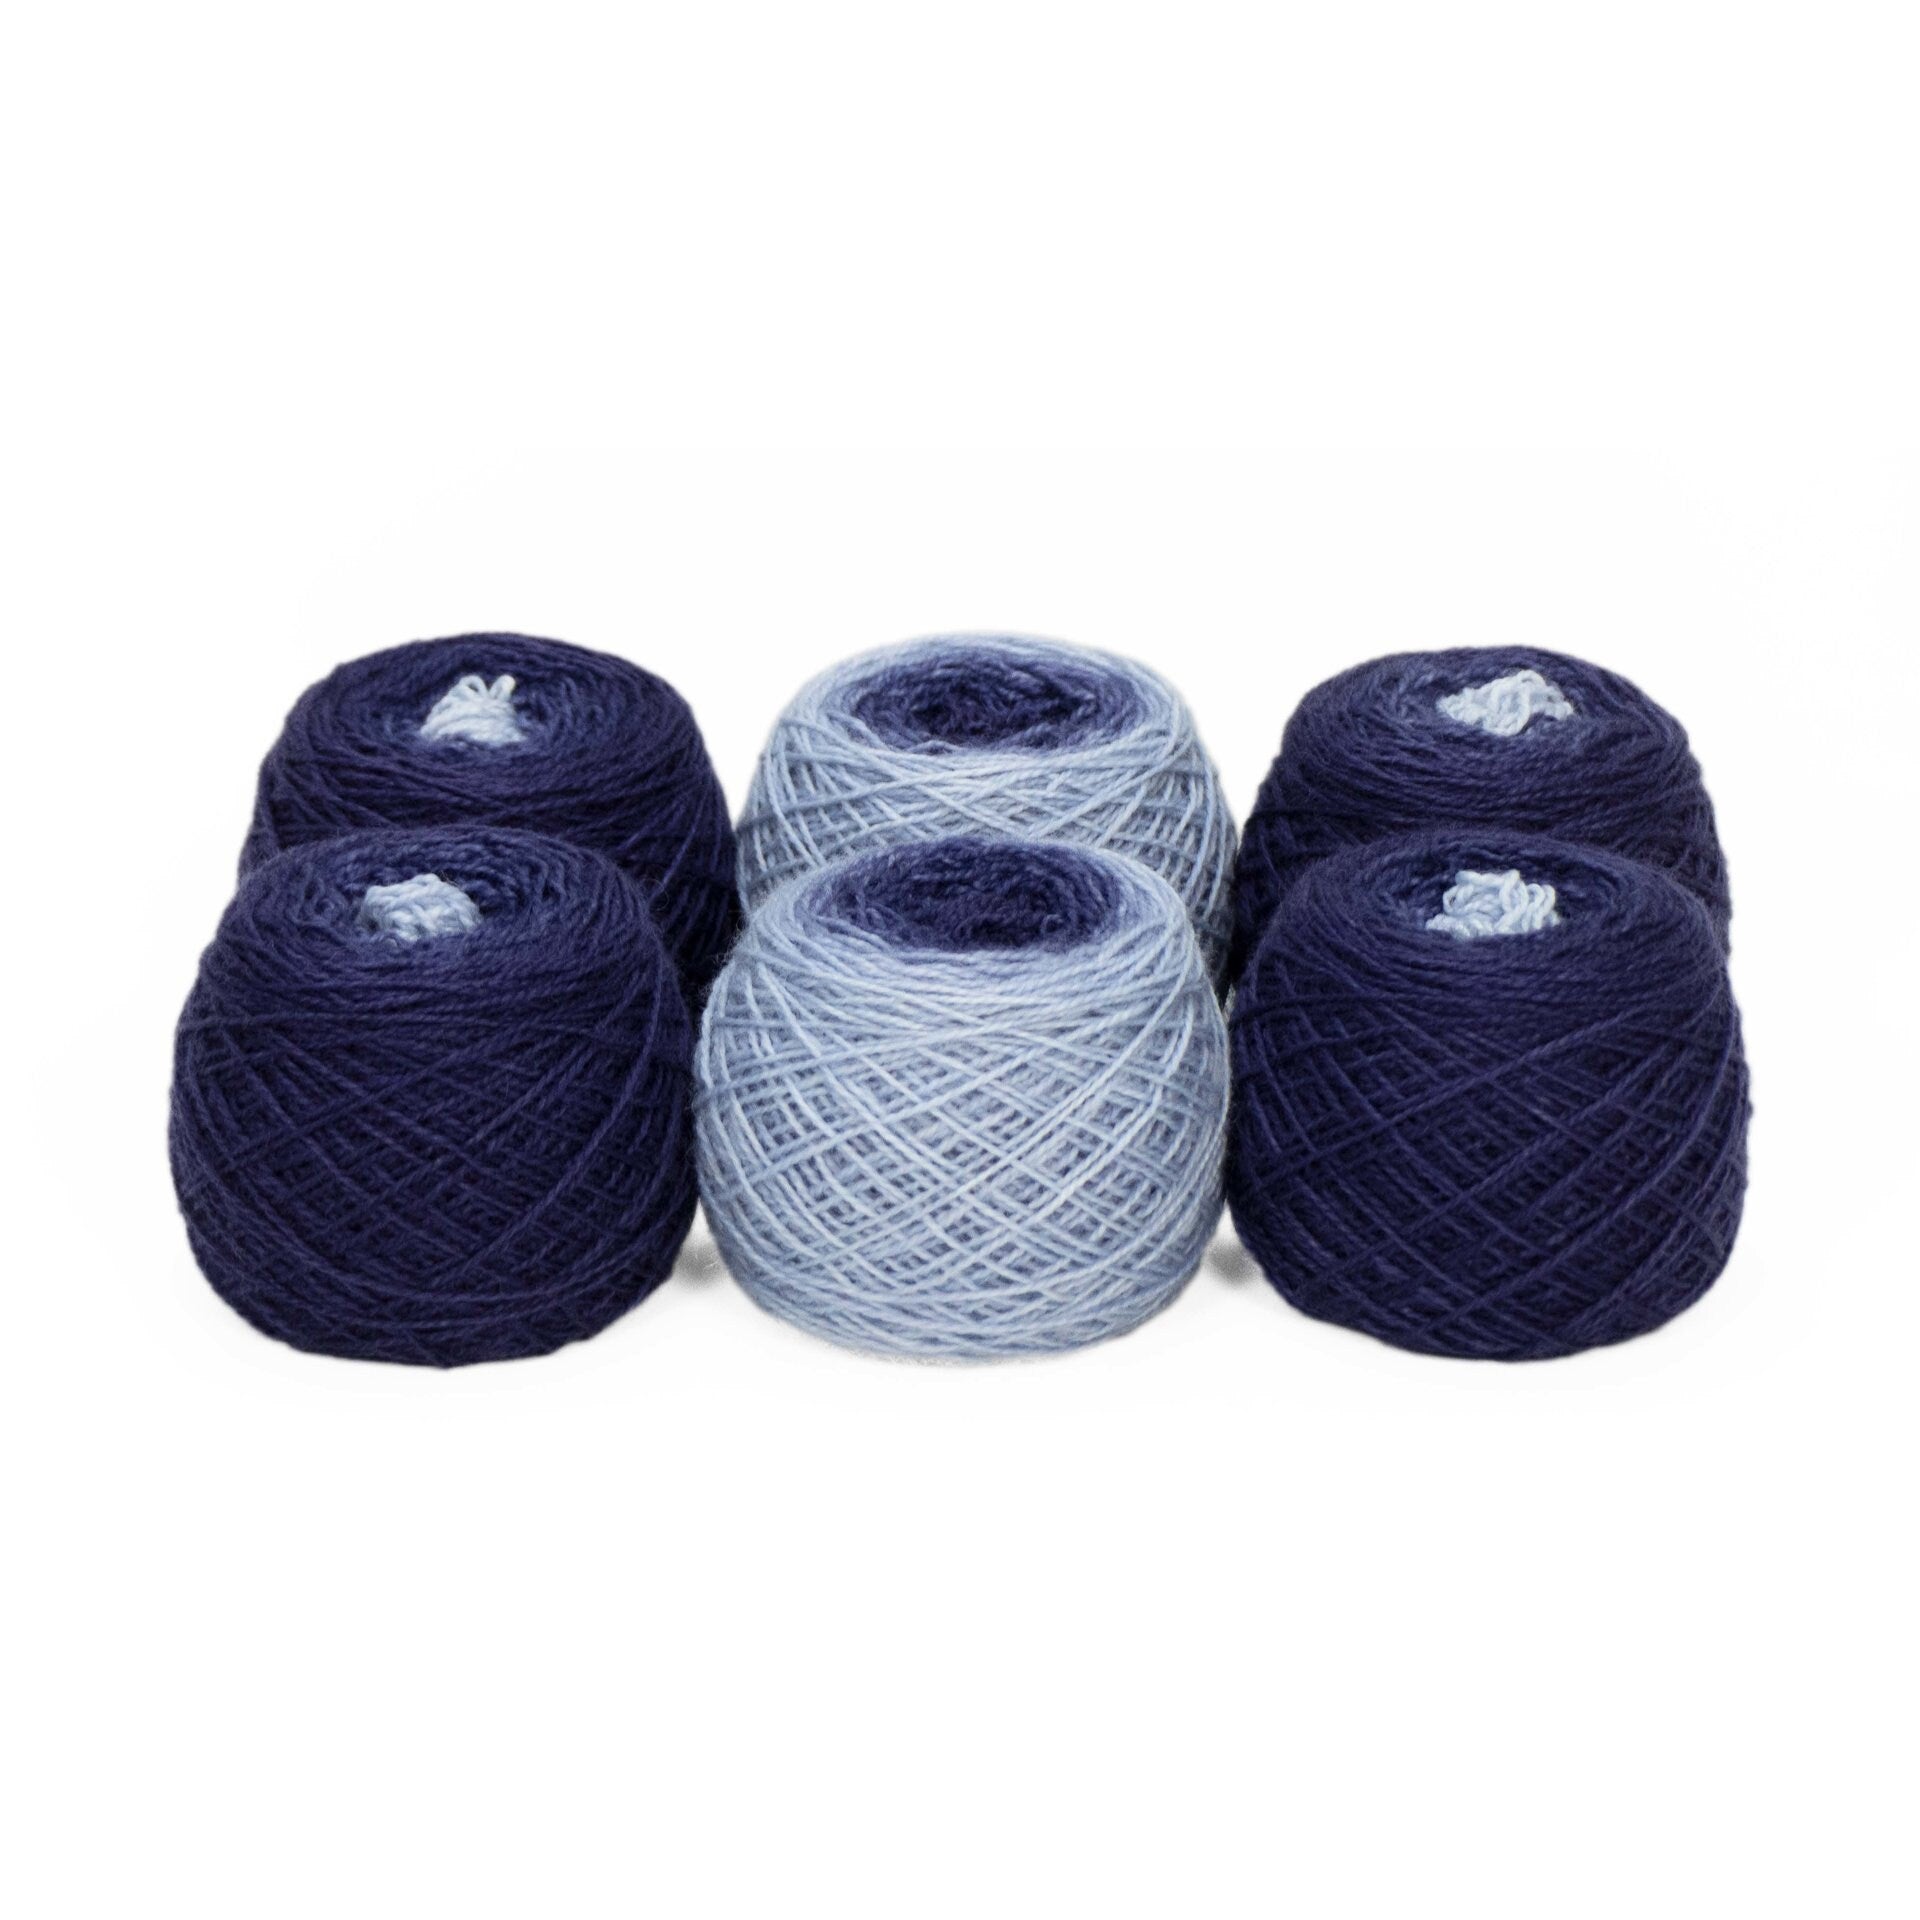 Sock Twins " Midnight Hour " - Lleap SW Merino/Nylon Handpainted Gradient Sock Yarn Set